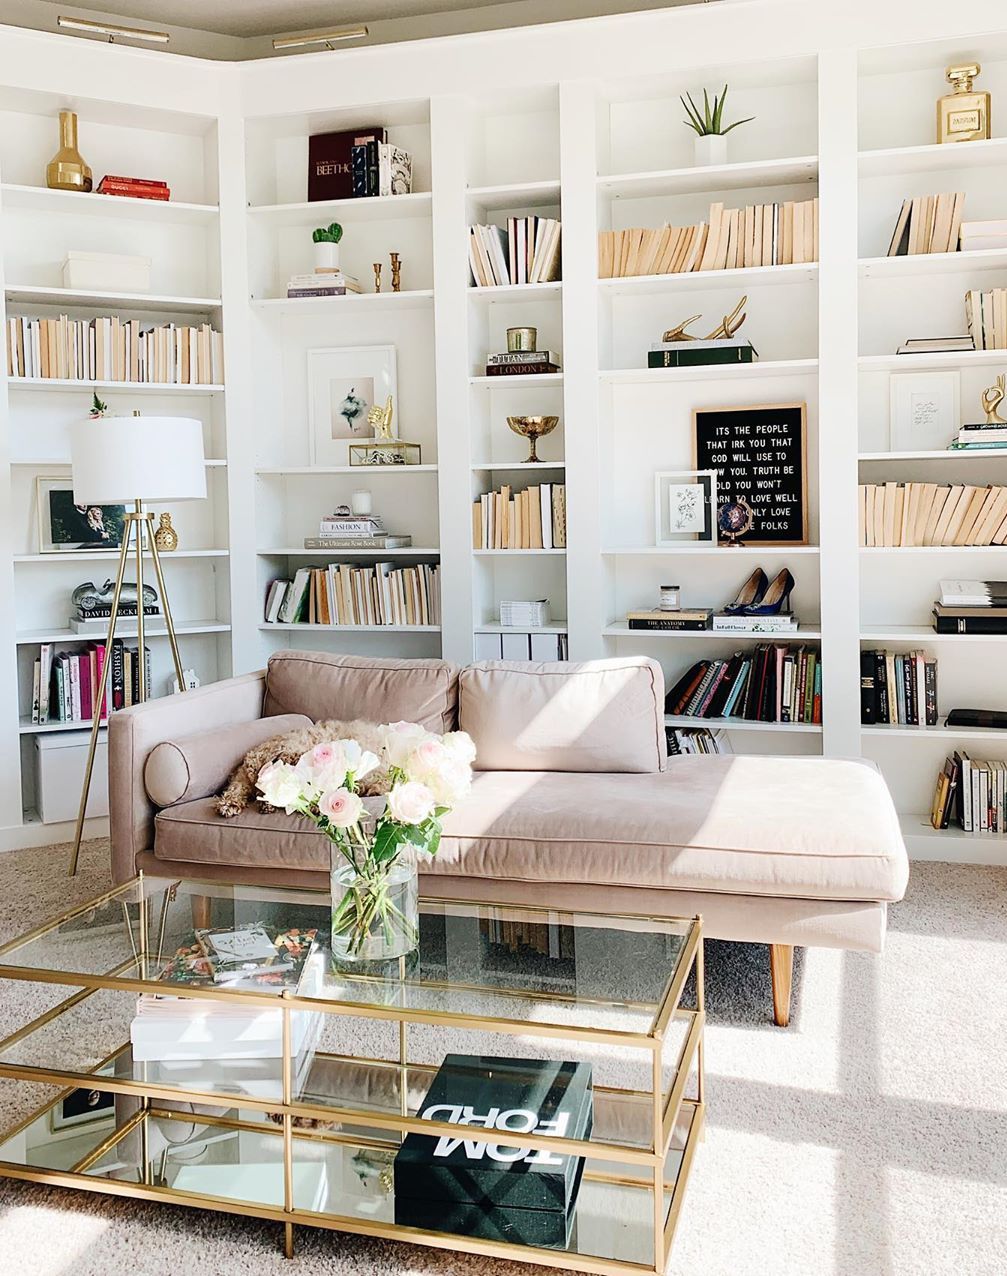 Bookshelves as wall decor via @kristinabudchanin